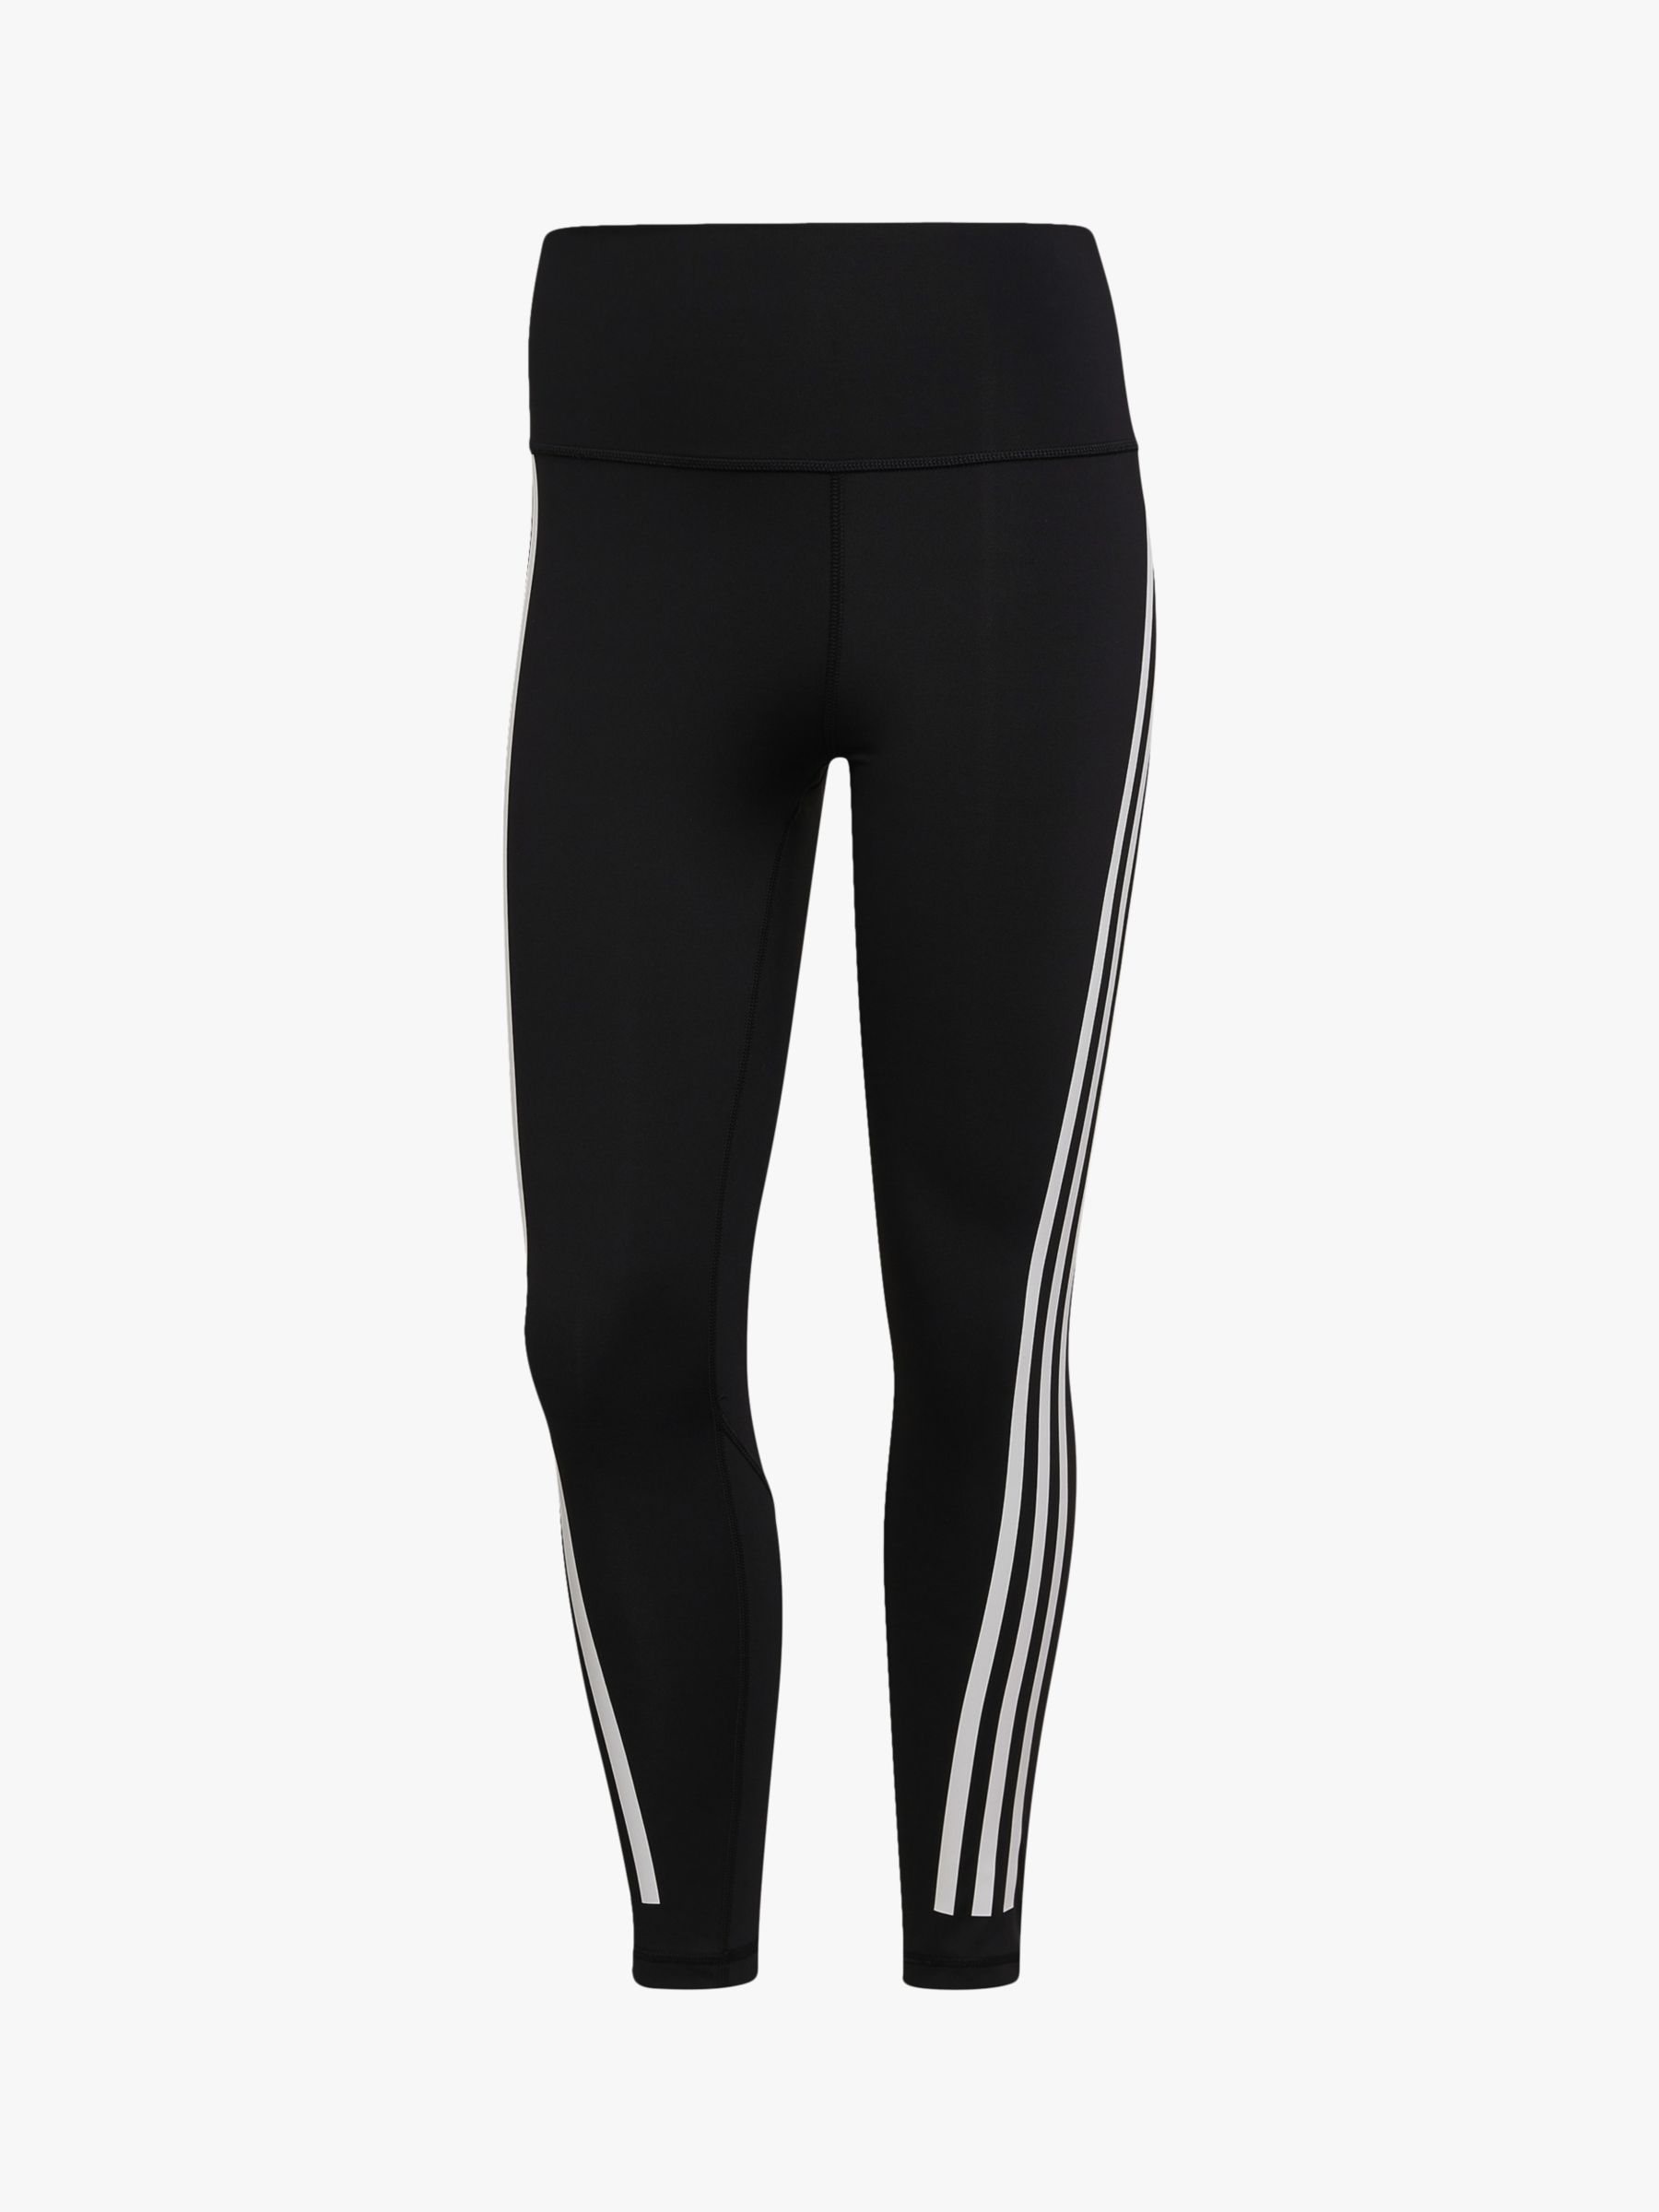 Adidas Women 3S Tight Pants Black Leggings Casual Yoga GYM Tight-pant GL0723